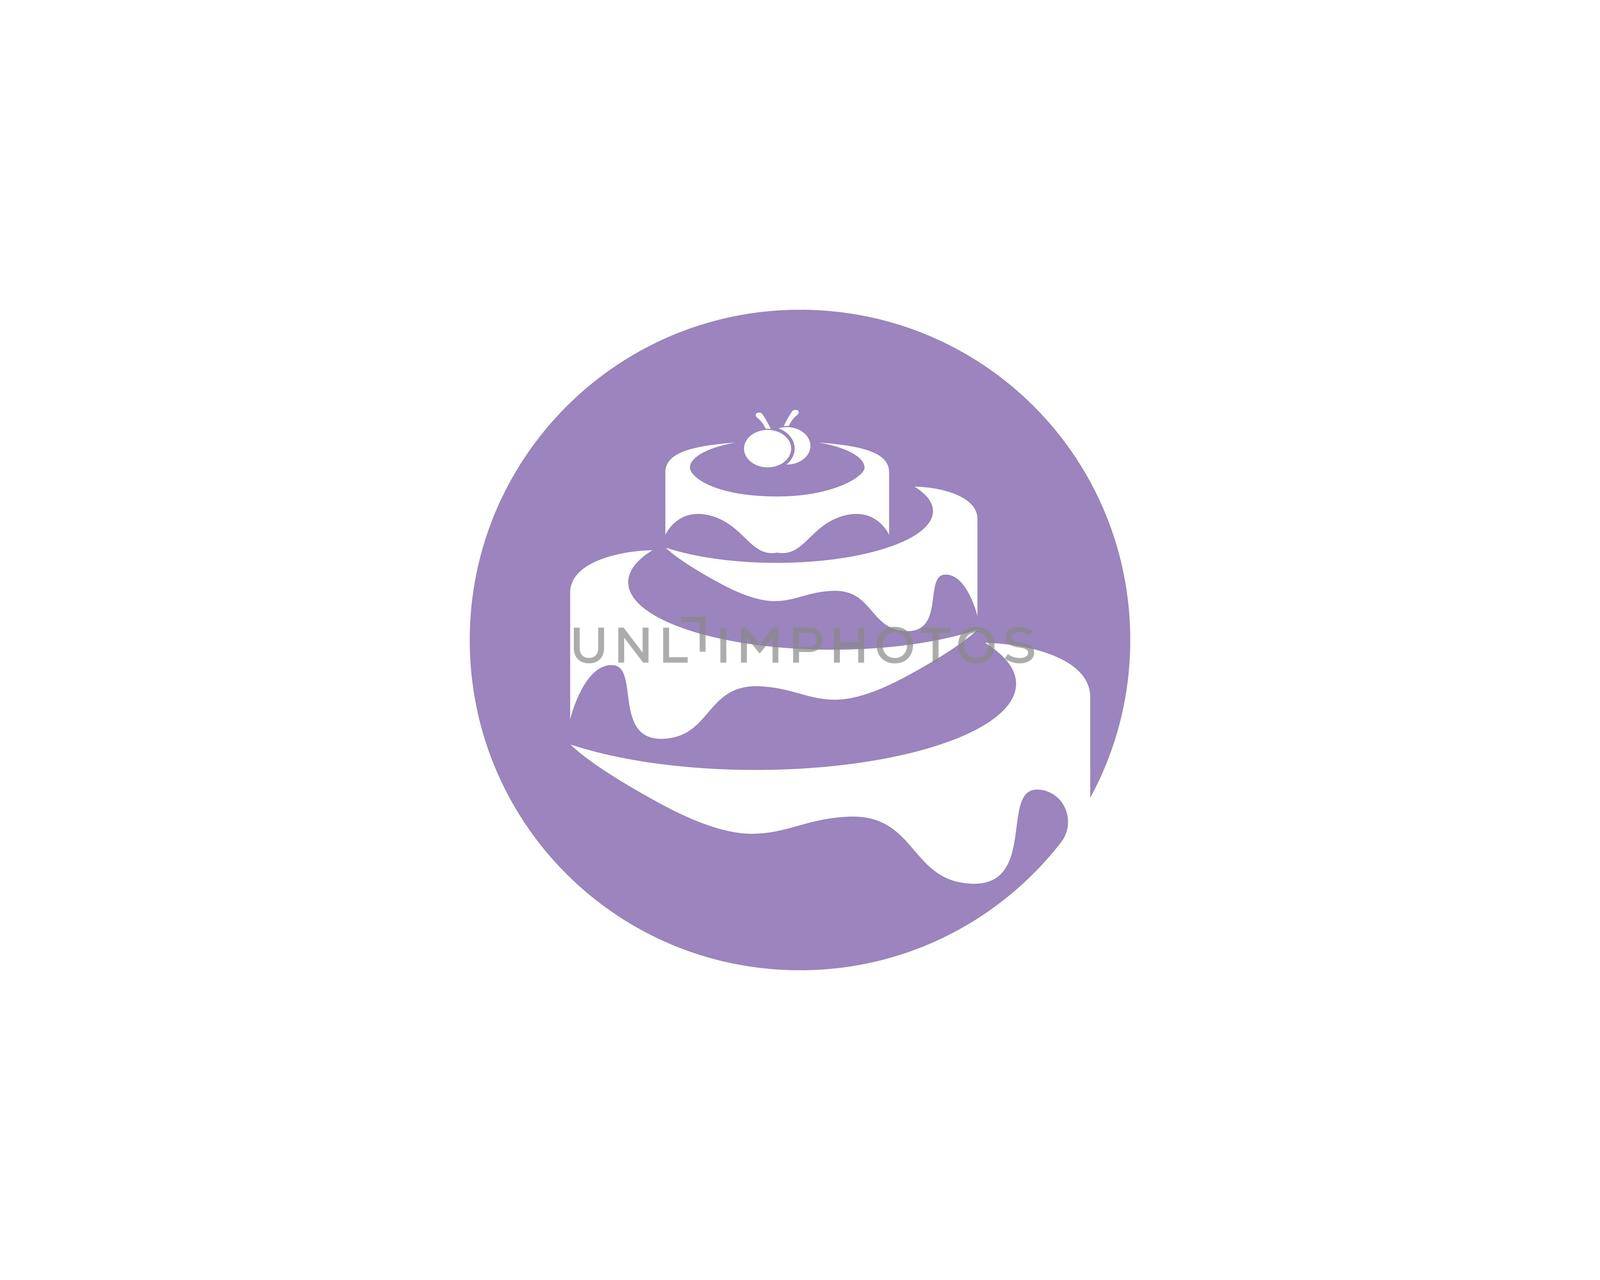 Cake logo vector by awk